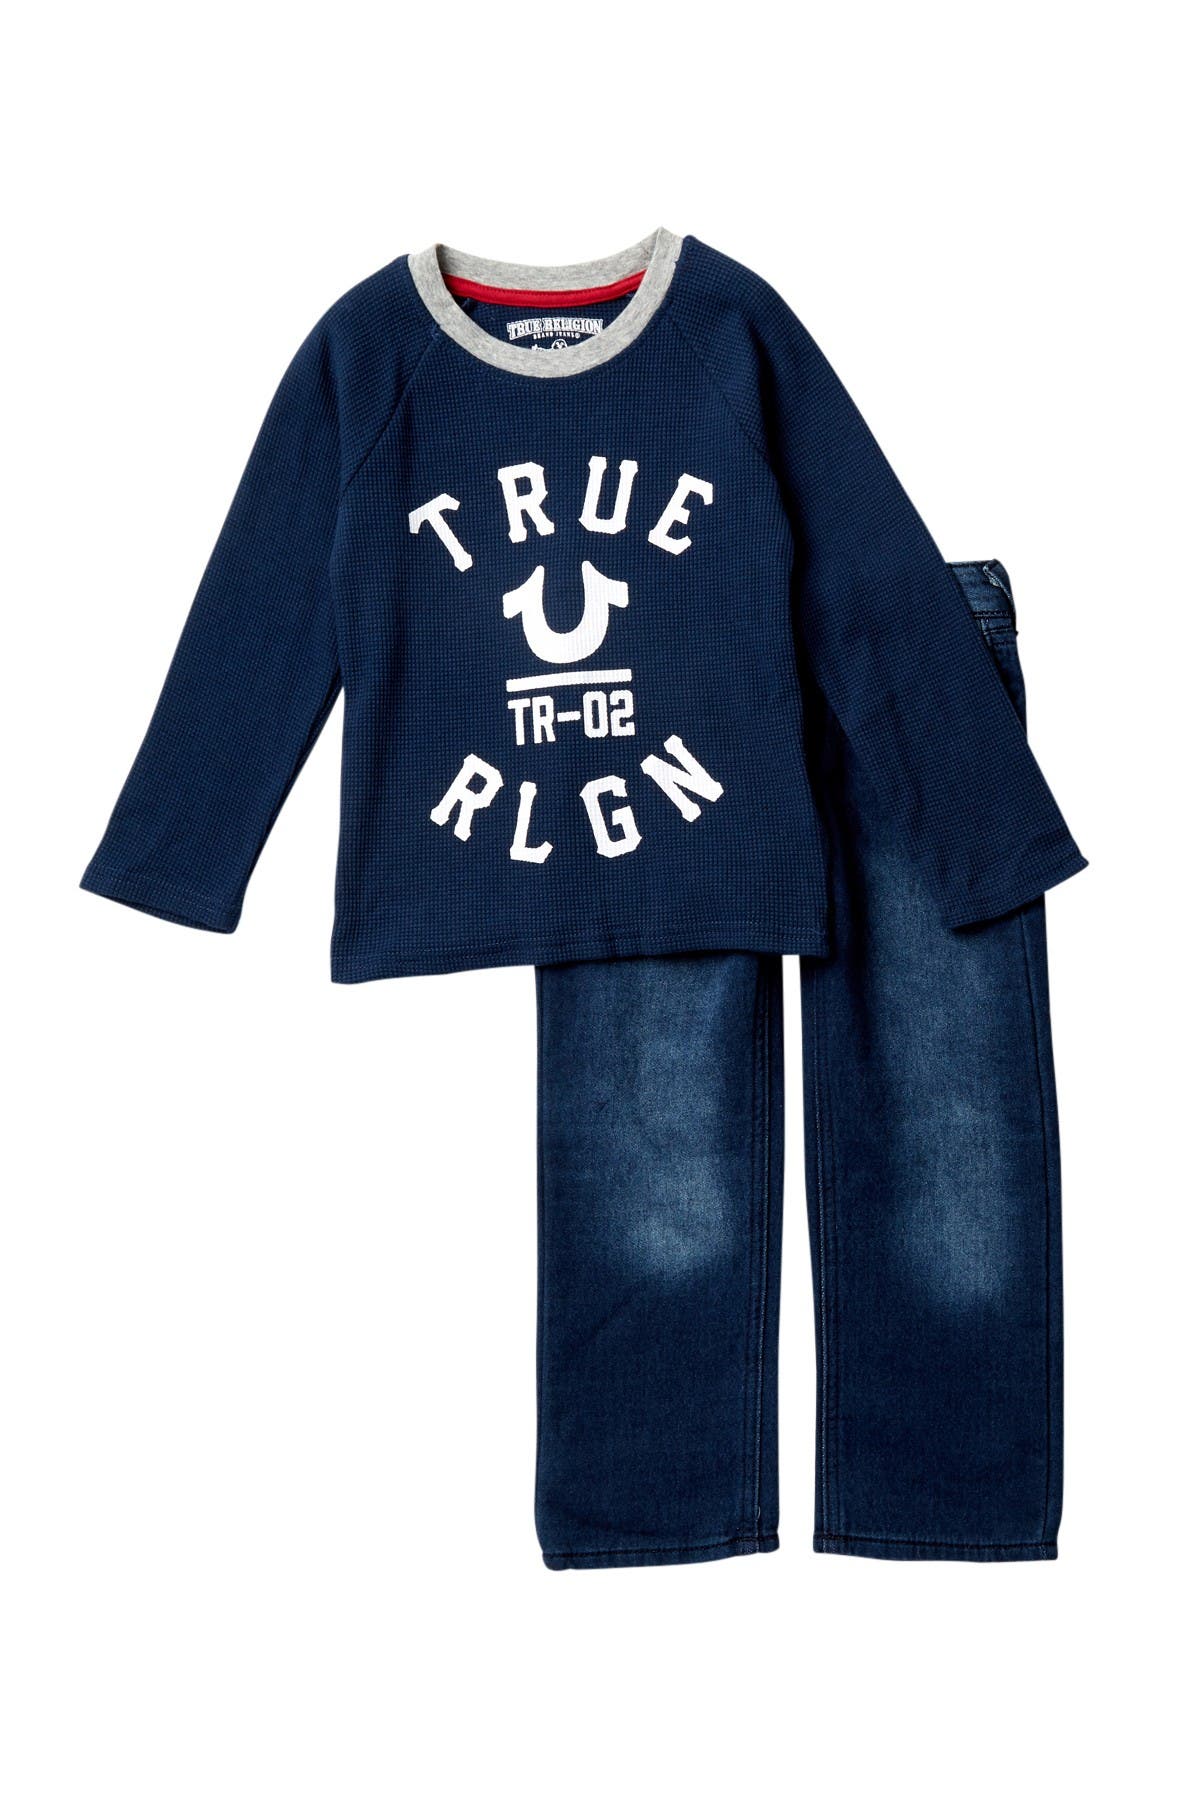 true religion toddler set